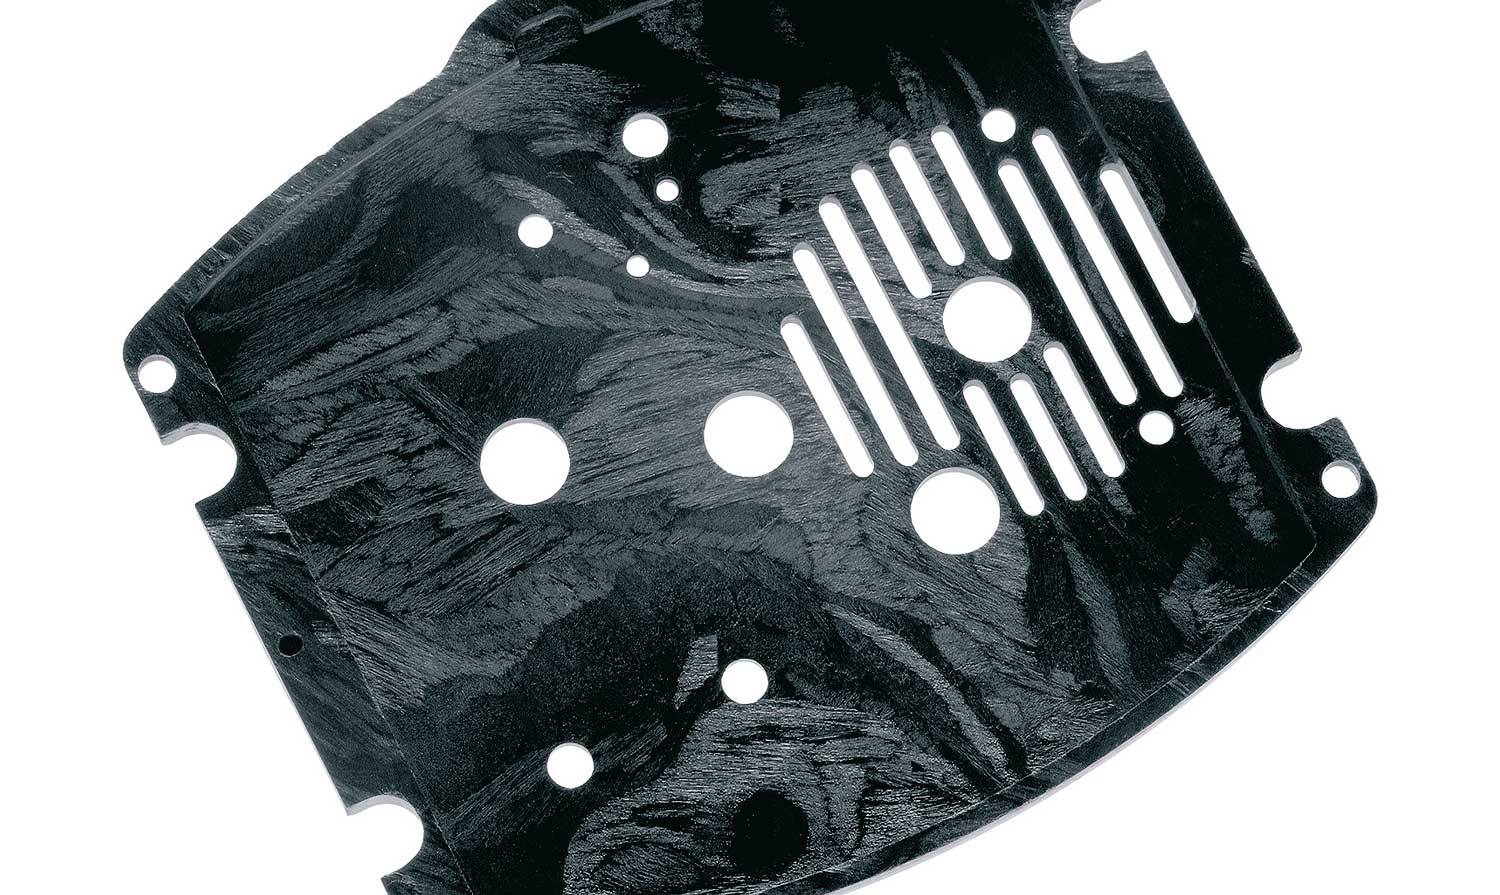 RM 006 carbon nanofiber baseplate